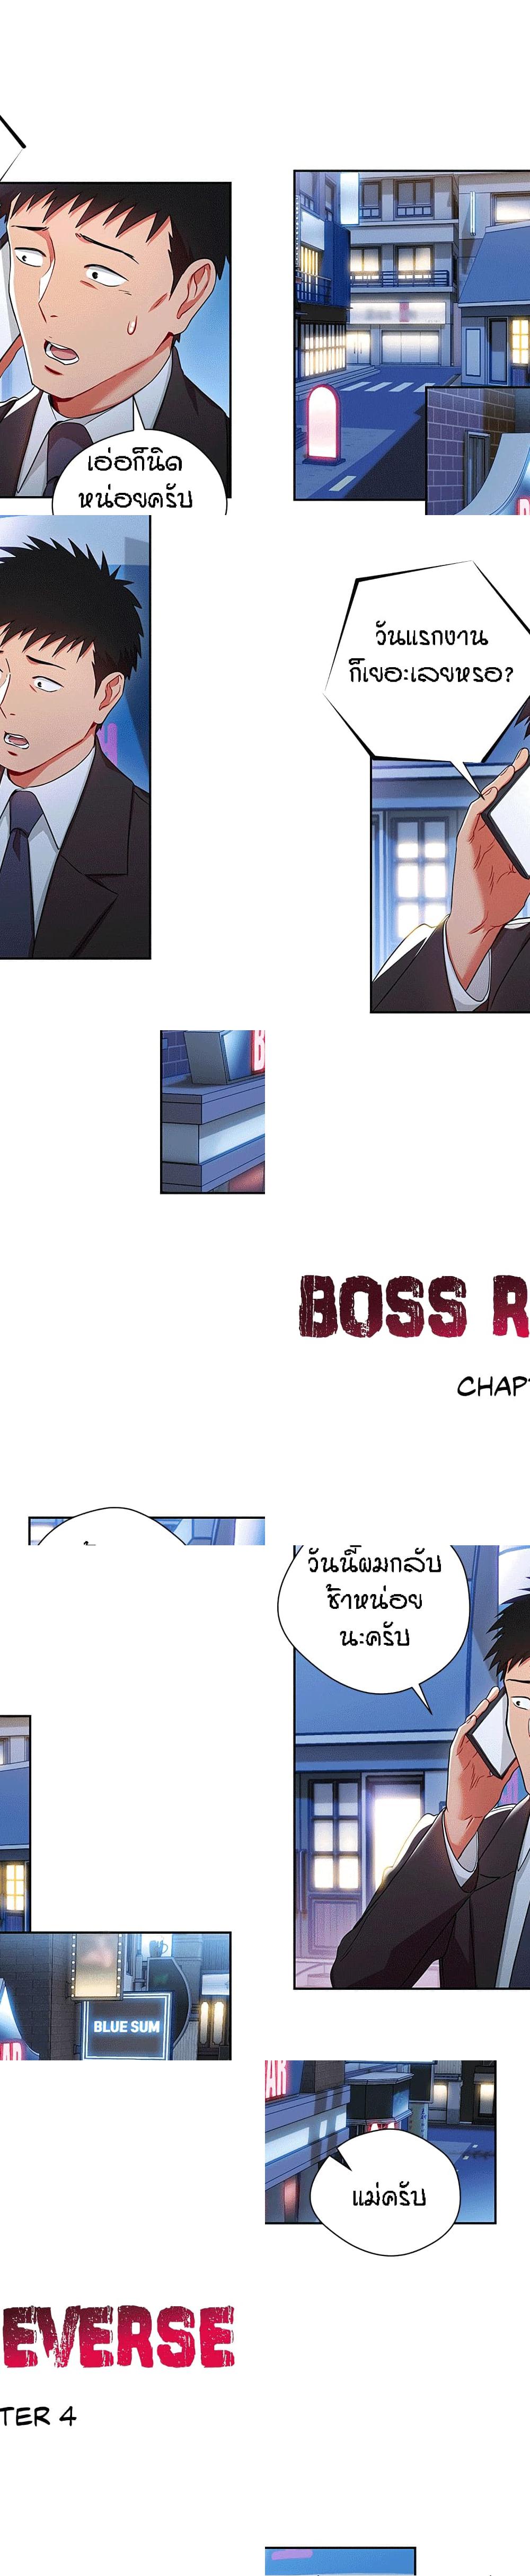 Boss Reverse - 4 - 2